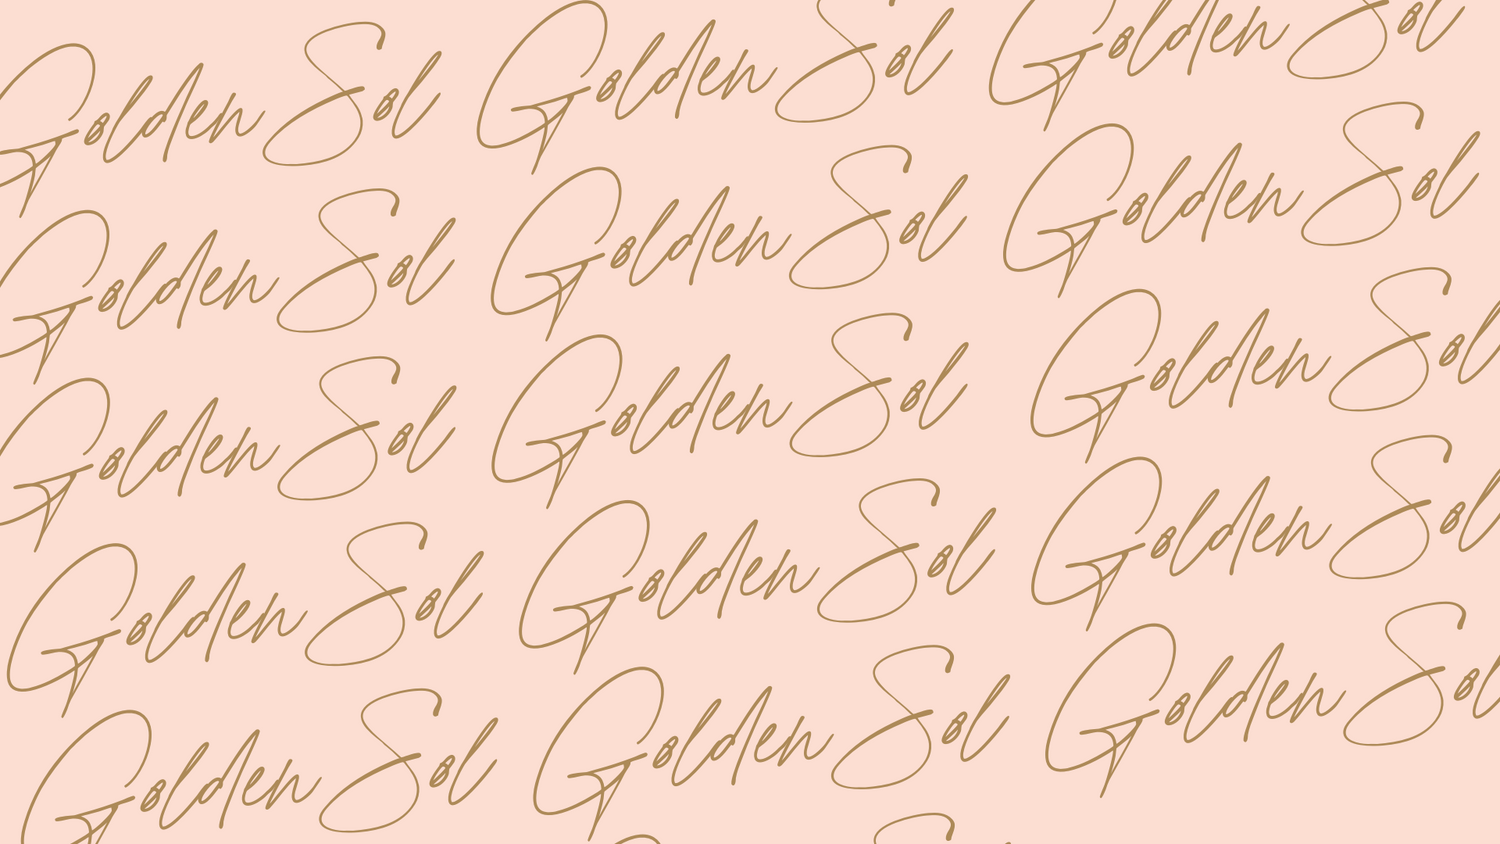 Golden Sol Brand Pattern | Sorority merch, Greek life, Sorority rush, sorority gifts